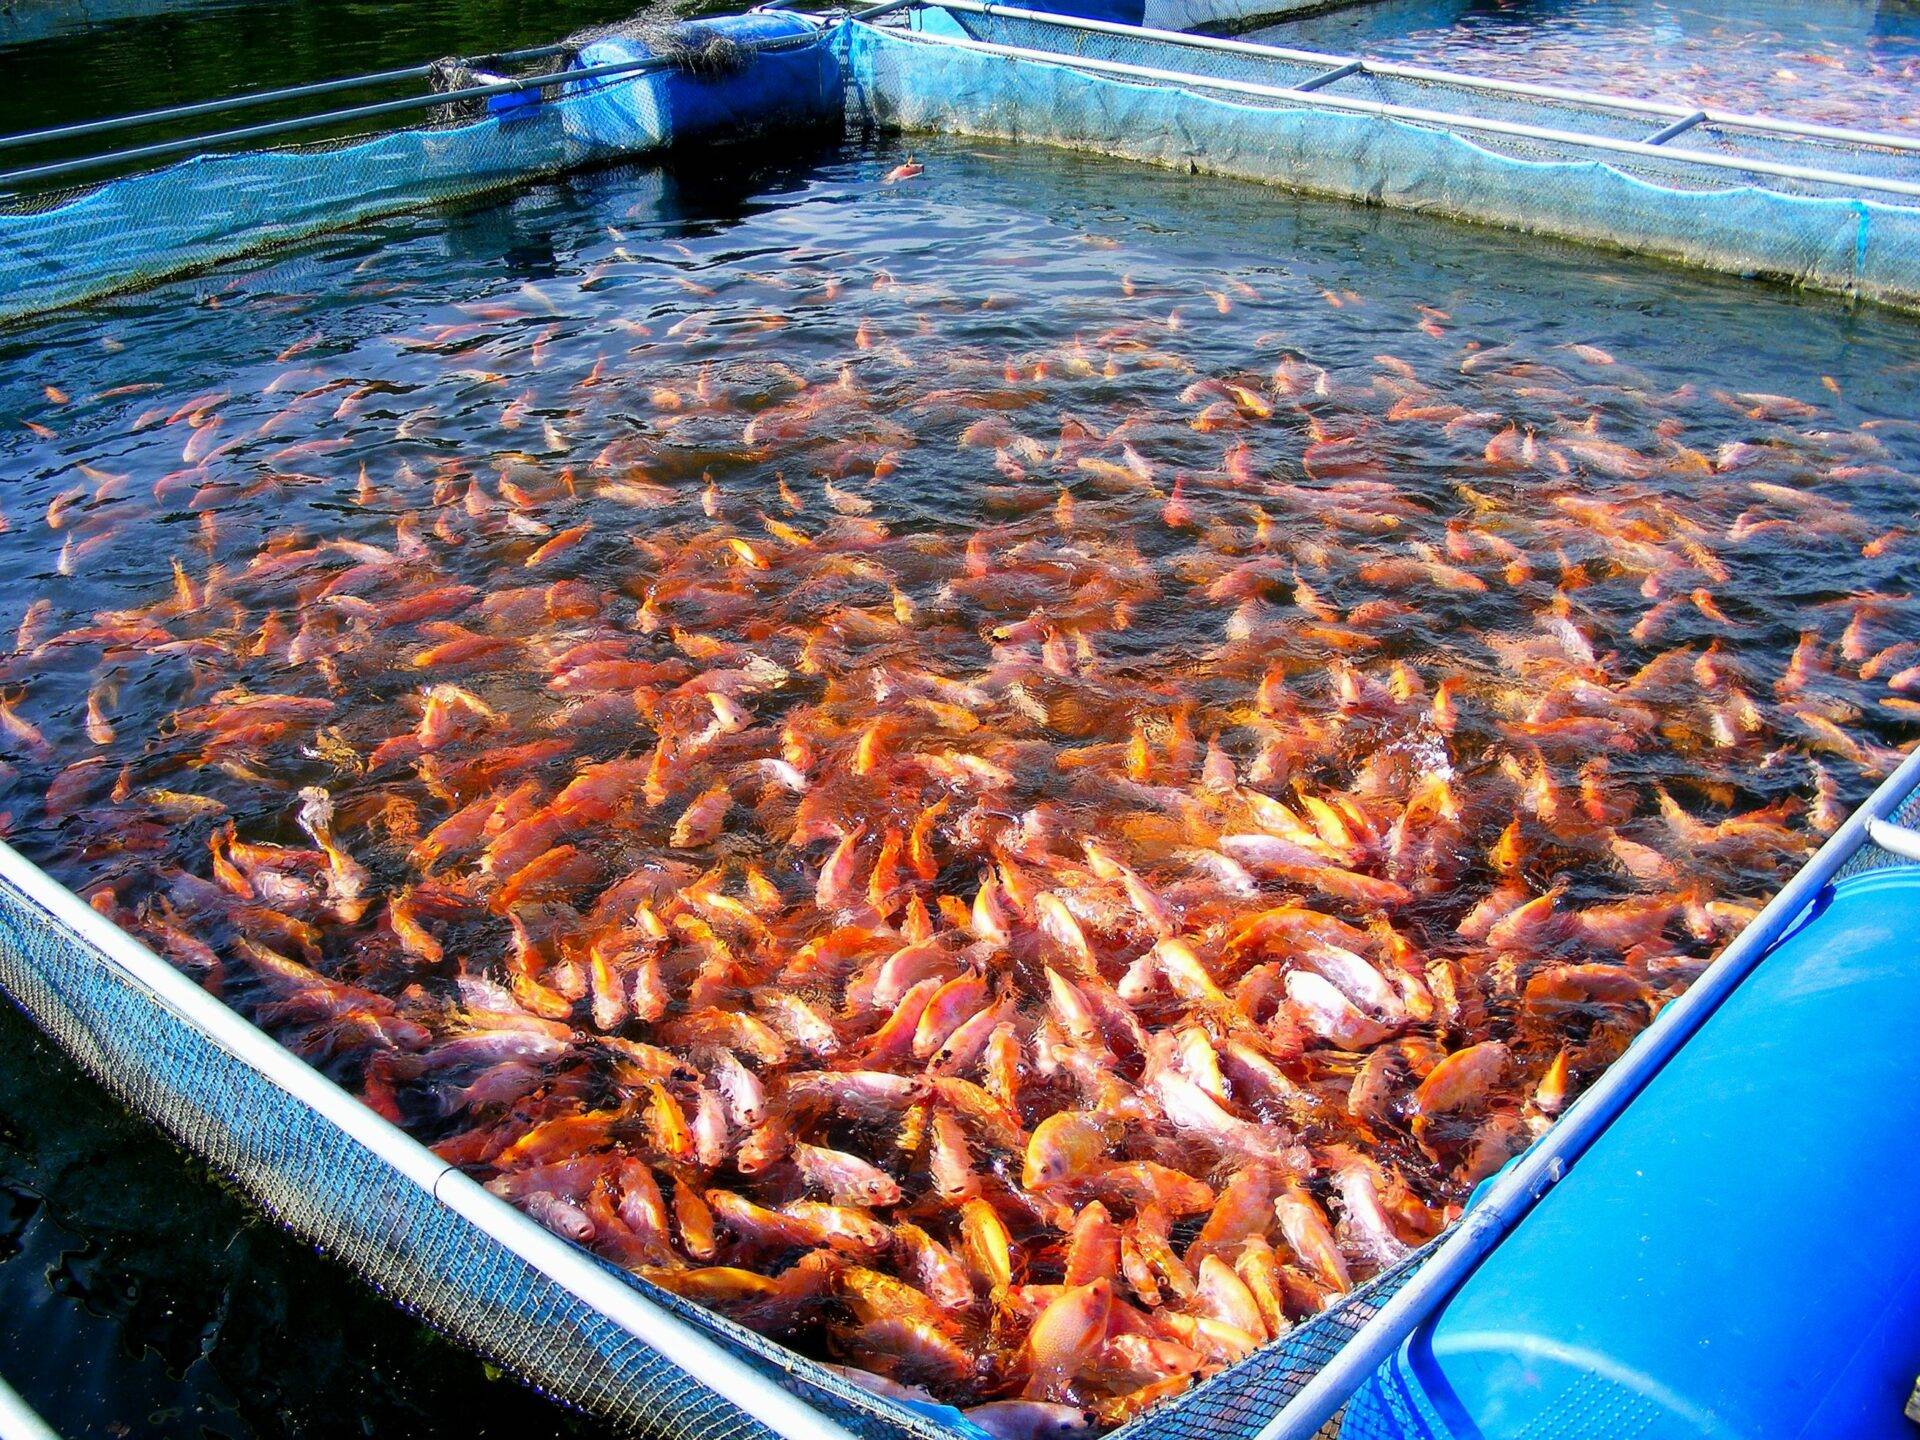 Global Aquaculture Industry Report